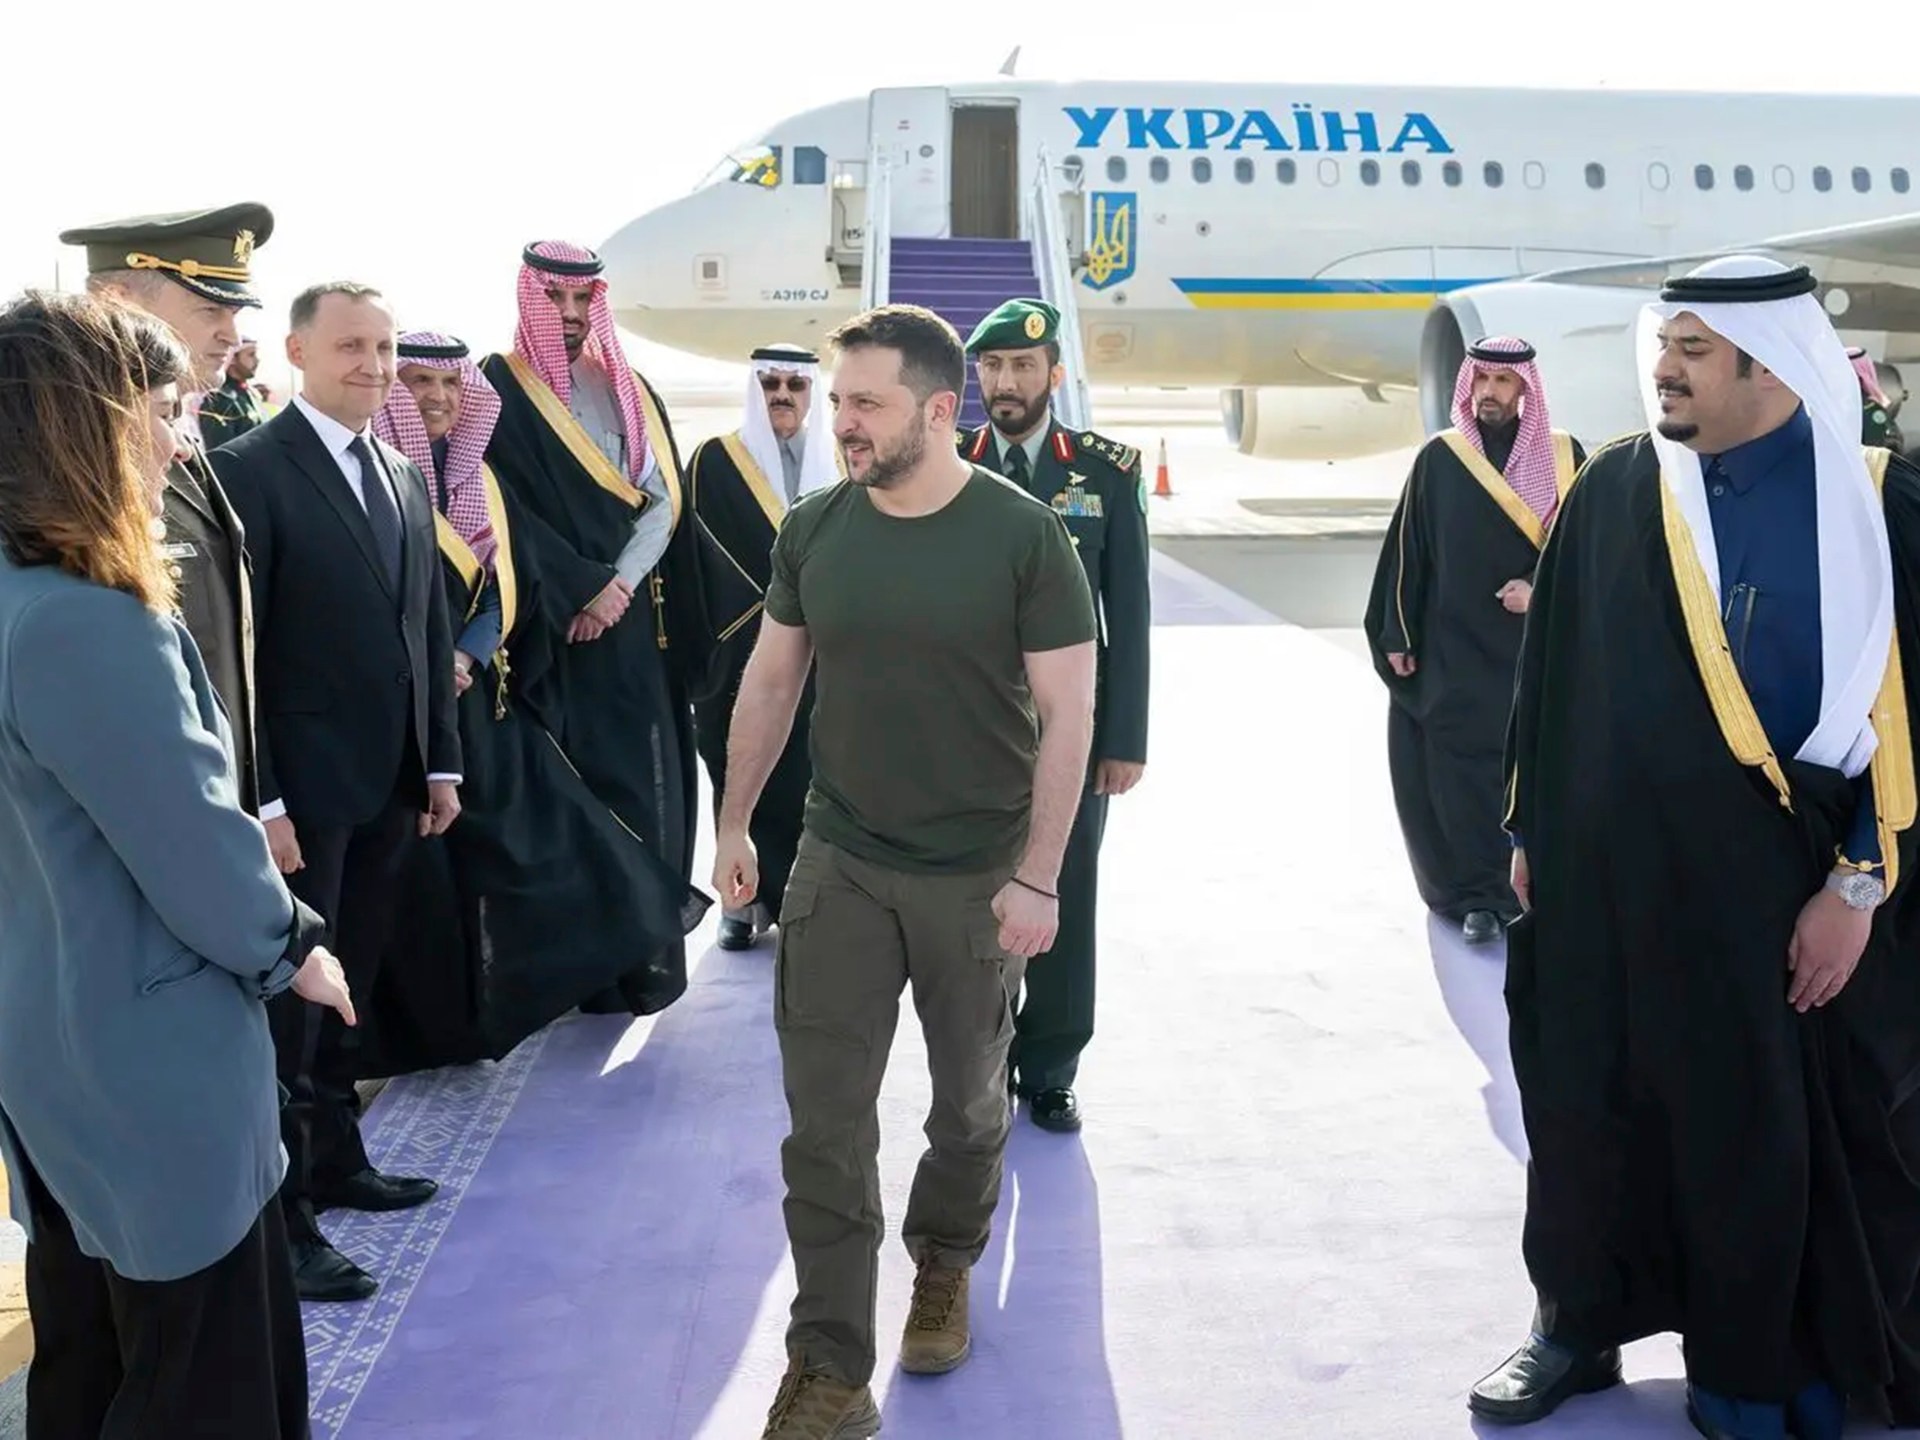 Zelenskyy in Saudi Arabia to push for peace, POW deal with Russia – Al Jazeera English